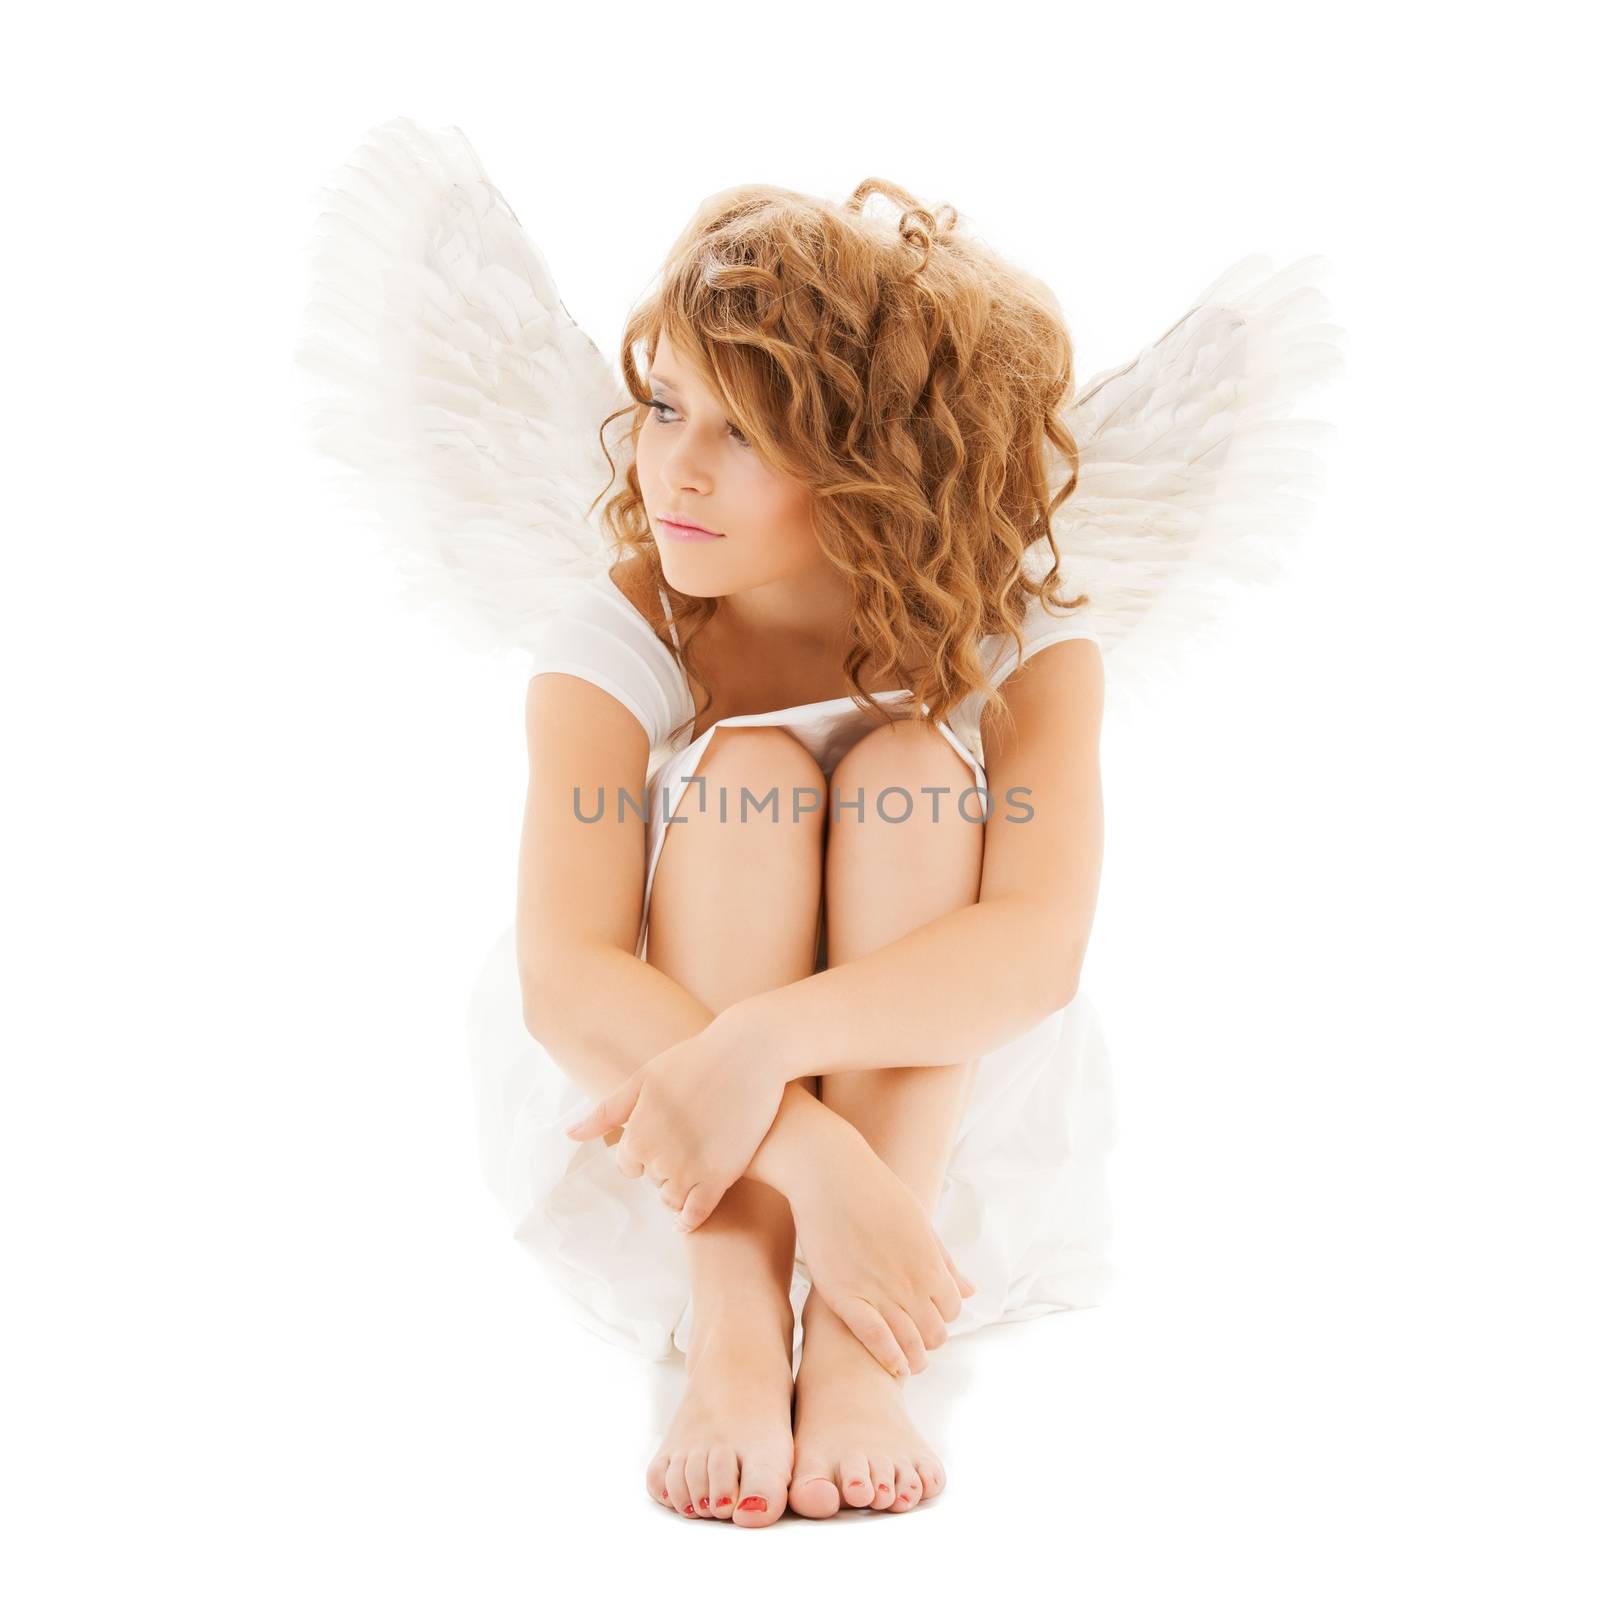 holidays and costumes concept - sad teenage angel girl